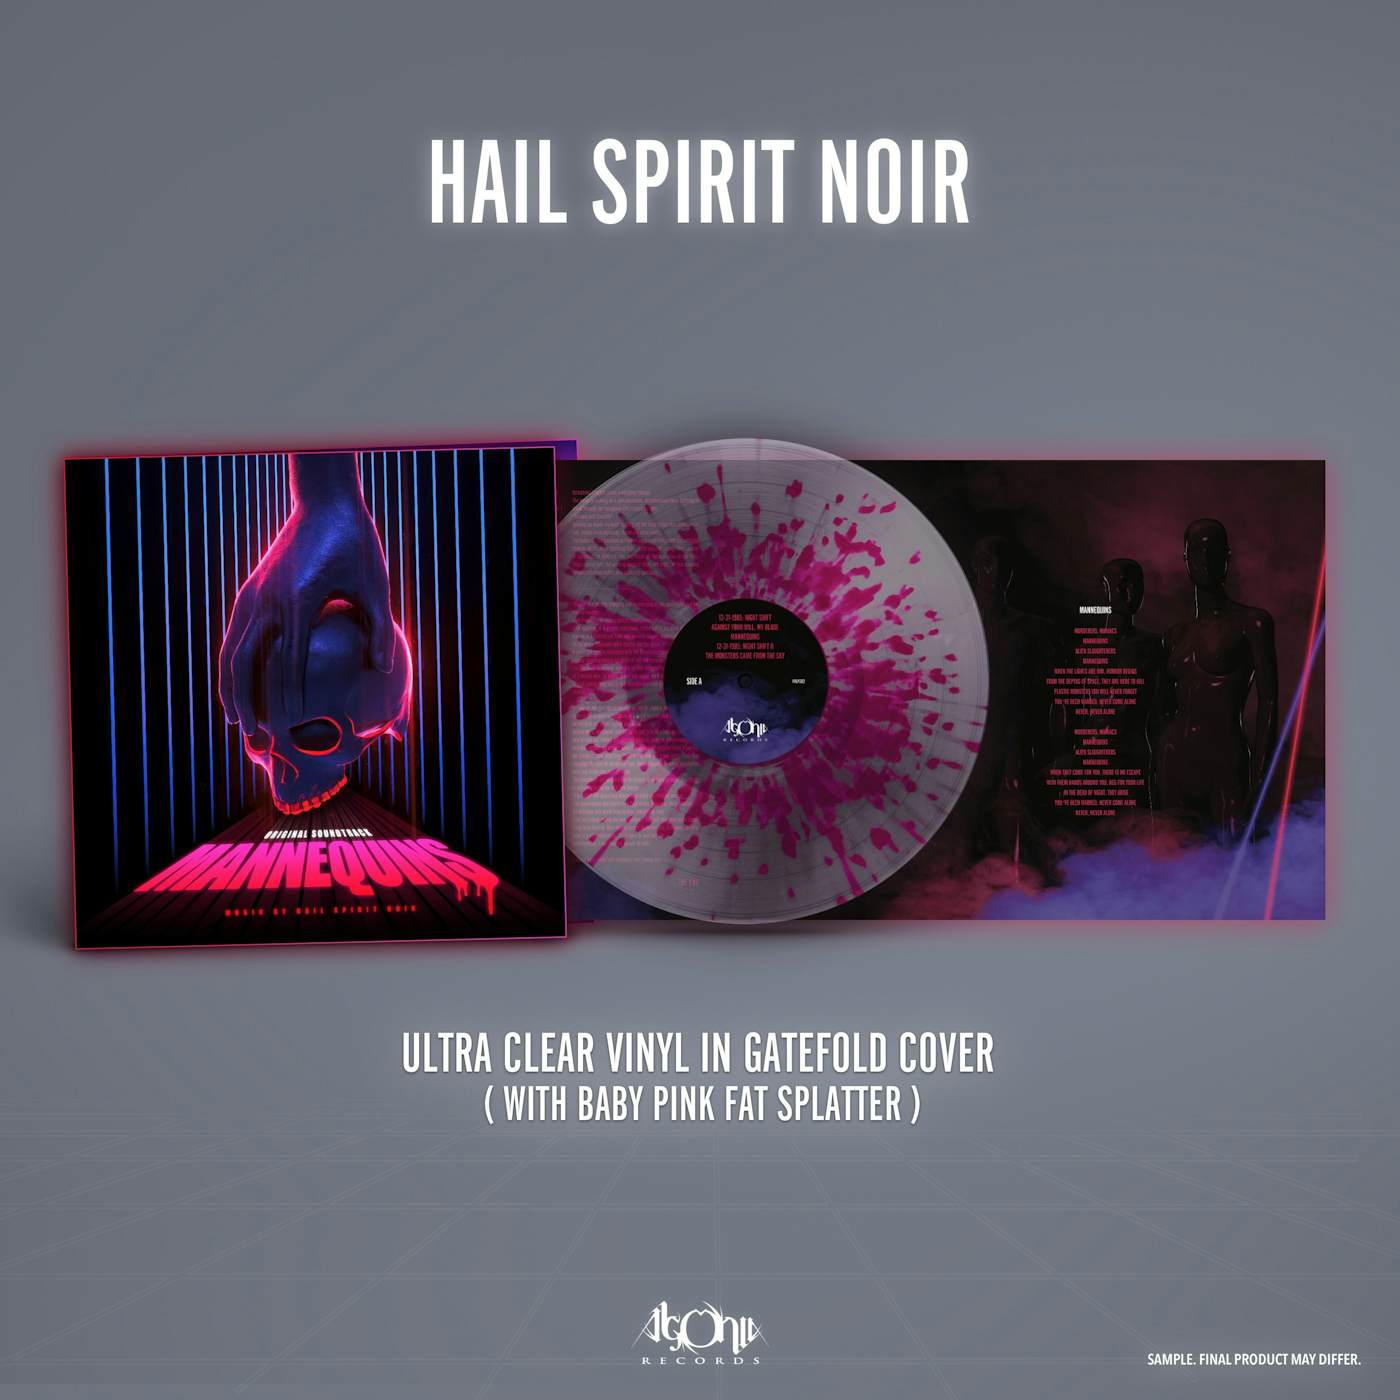 Hail Spirit Noir "Mannequins (Splatter Vinyl)" Limited Edition 12"